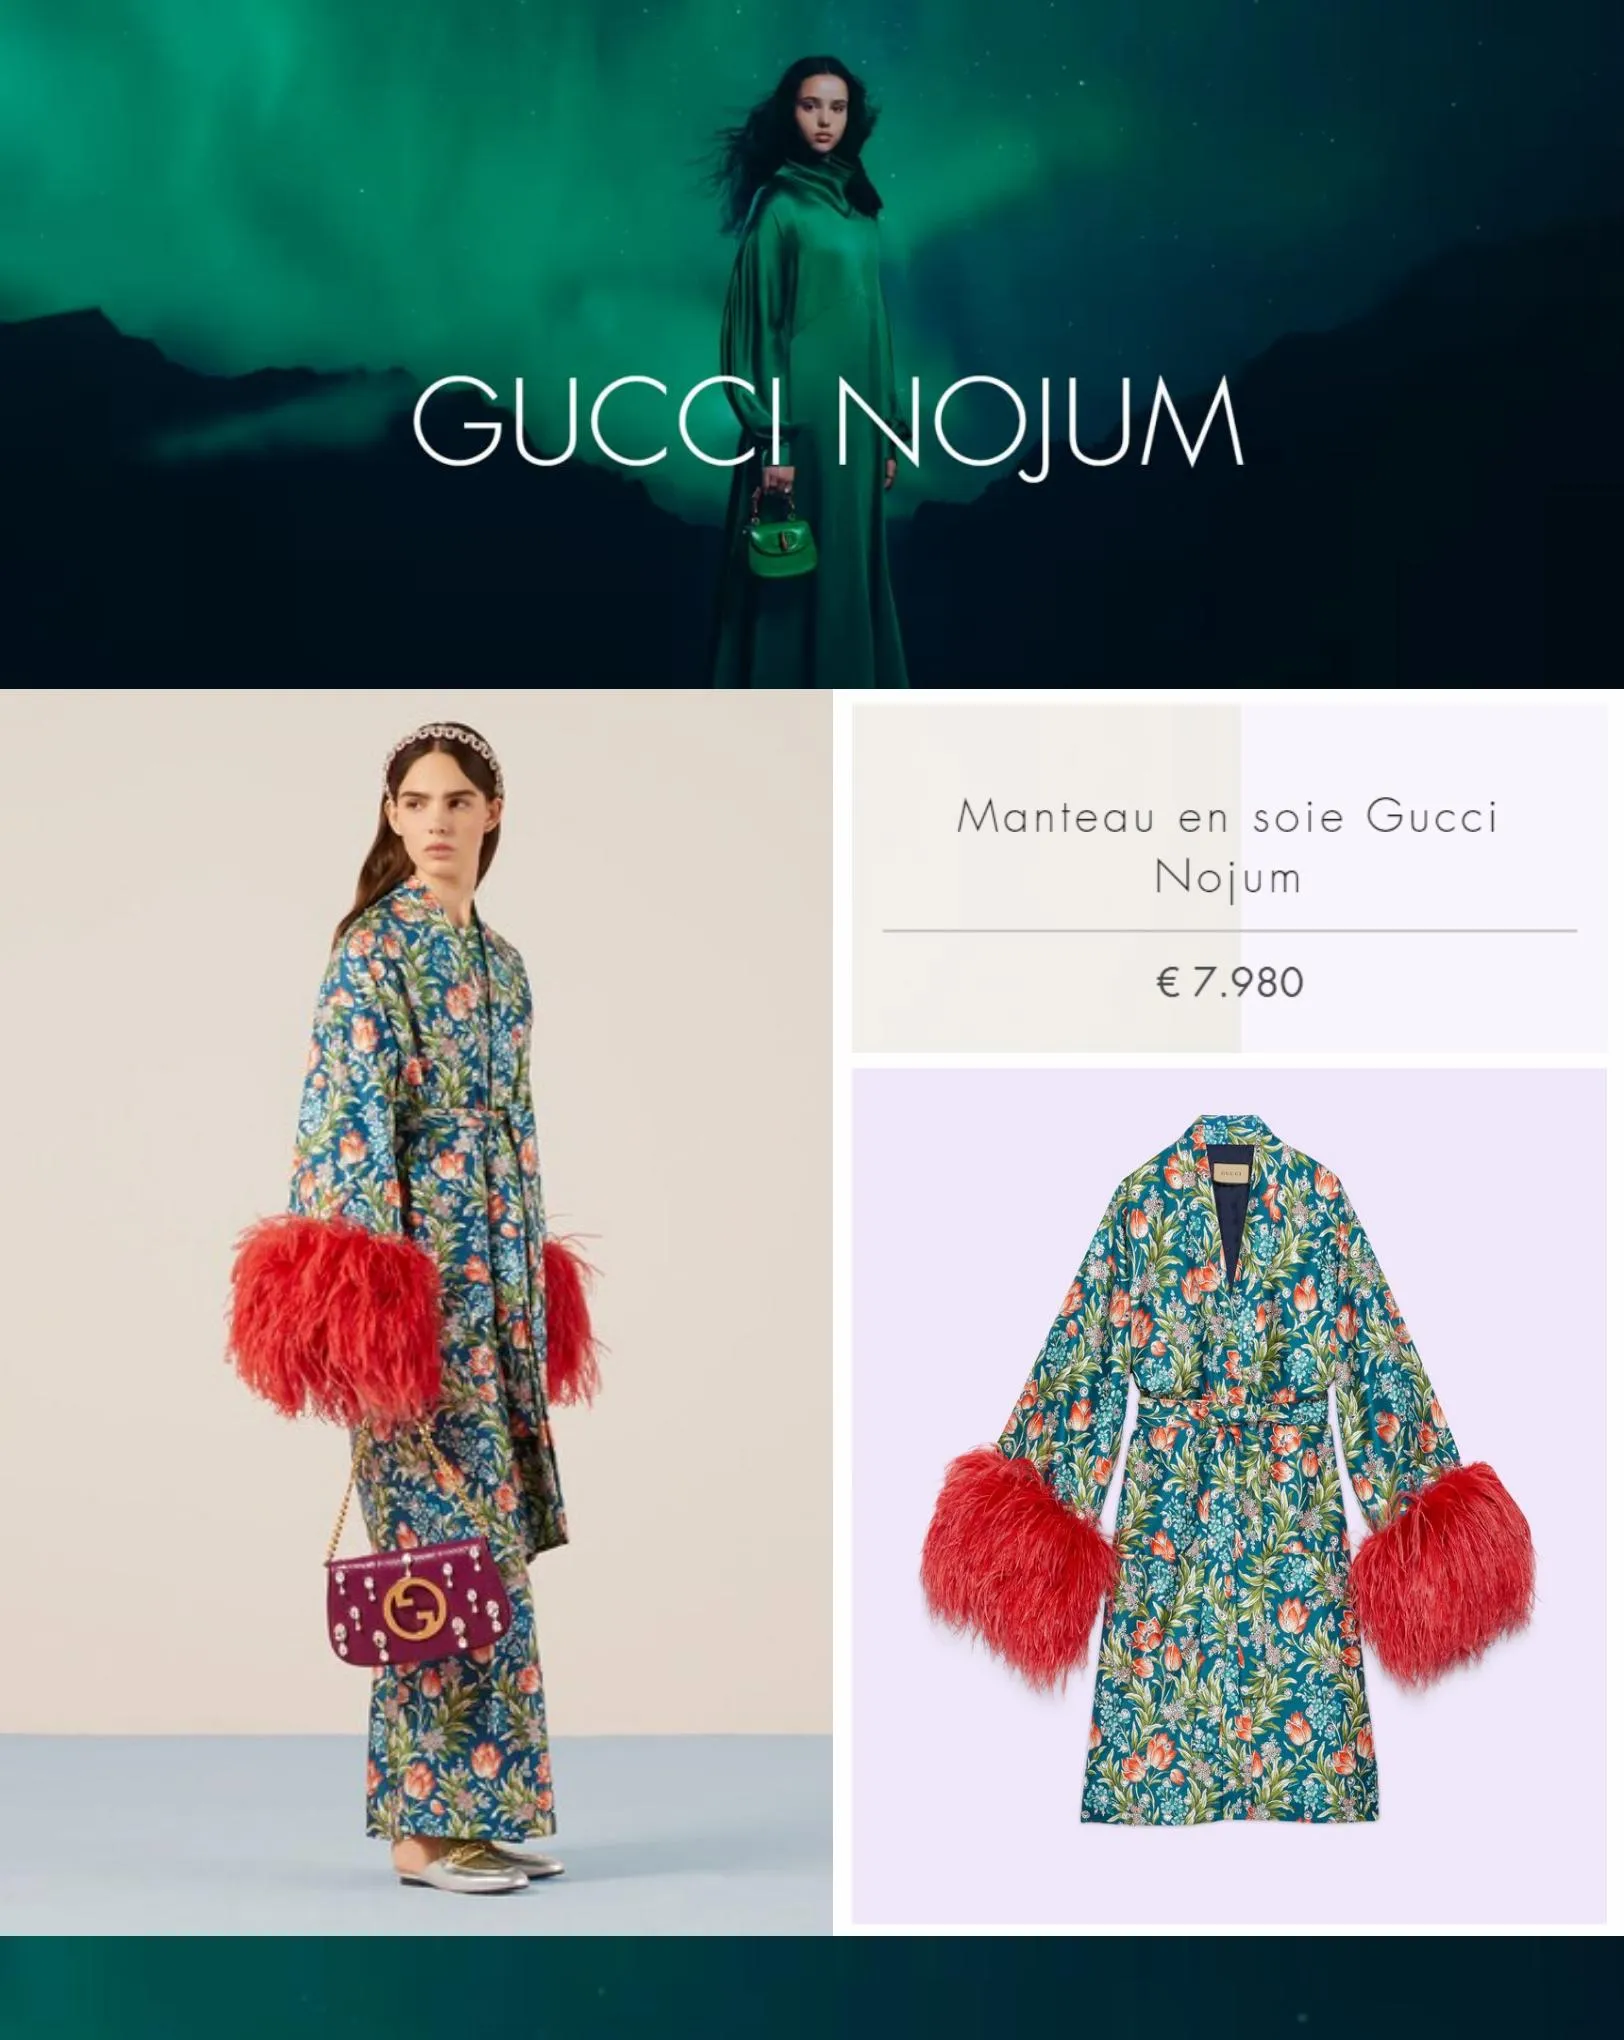 Catalogue Gucci Nojum, page 00004